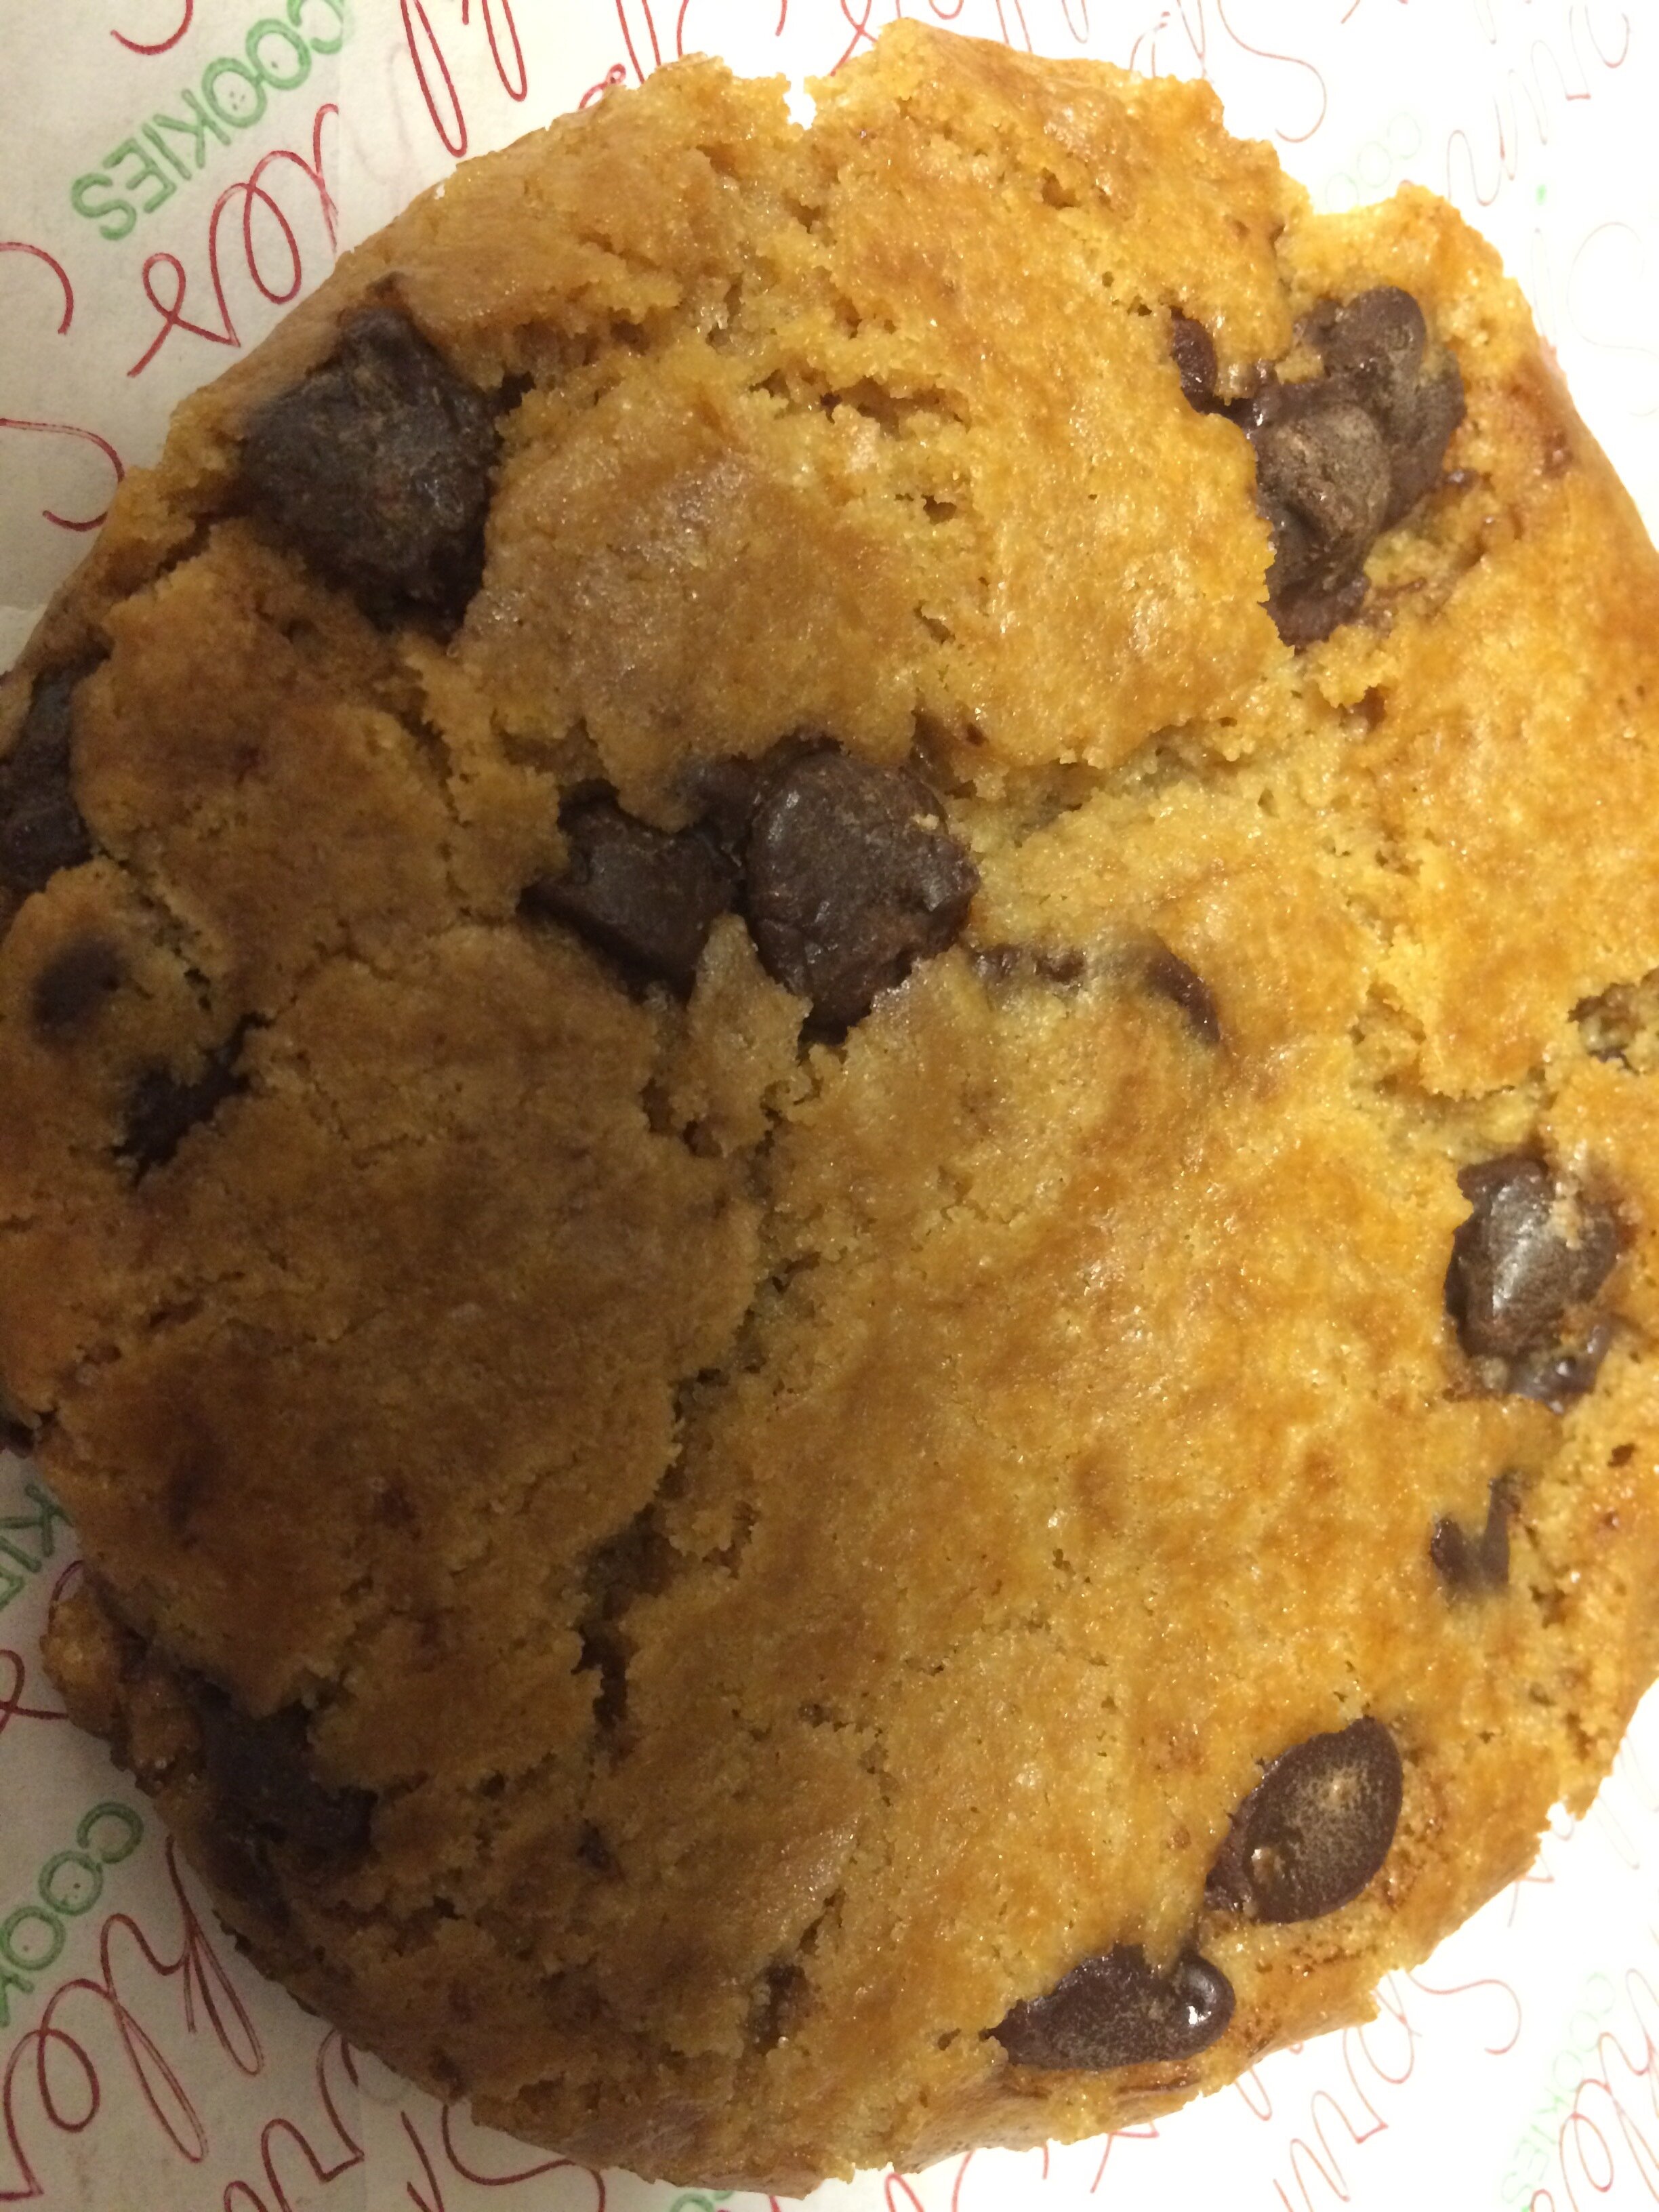 Chocolate Chip Cookie at Sprinkles Cupcakes